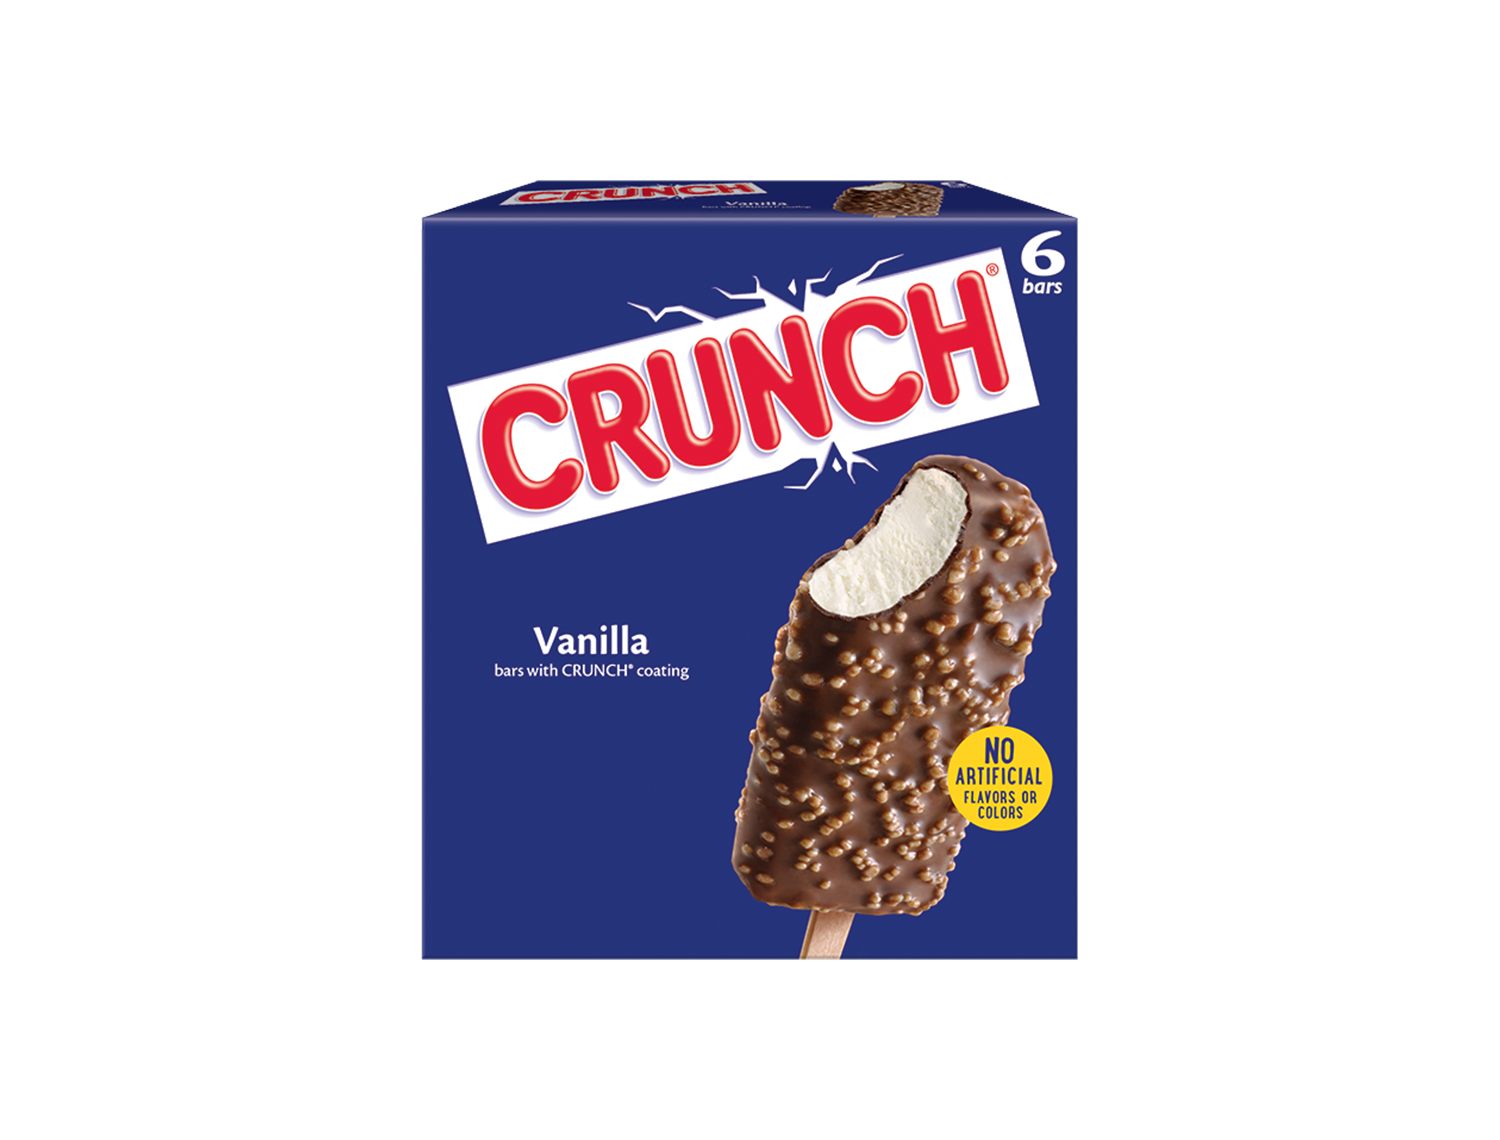 Box of Crunch ice cream bars